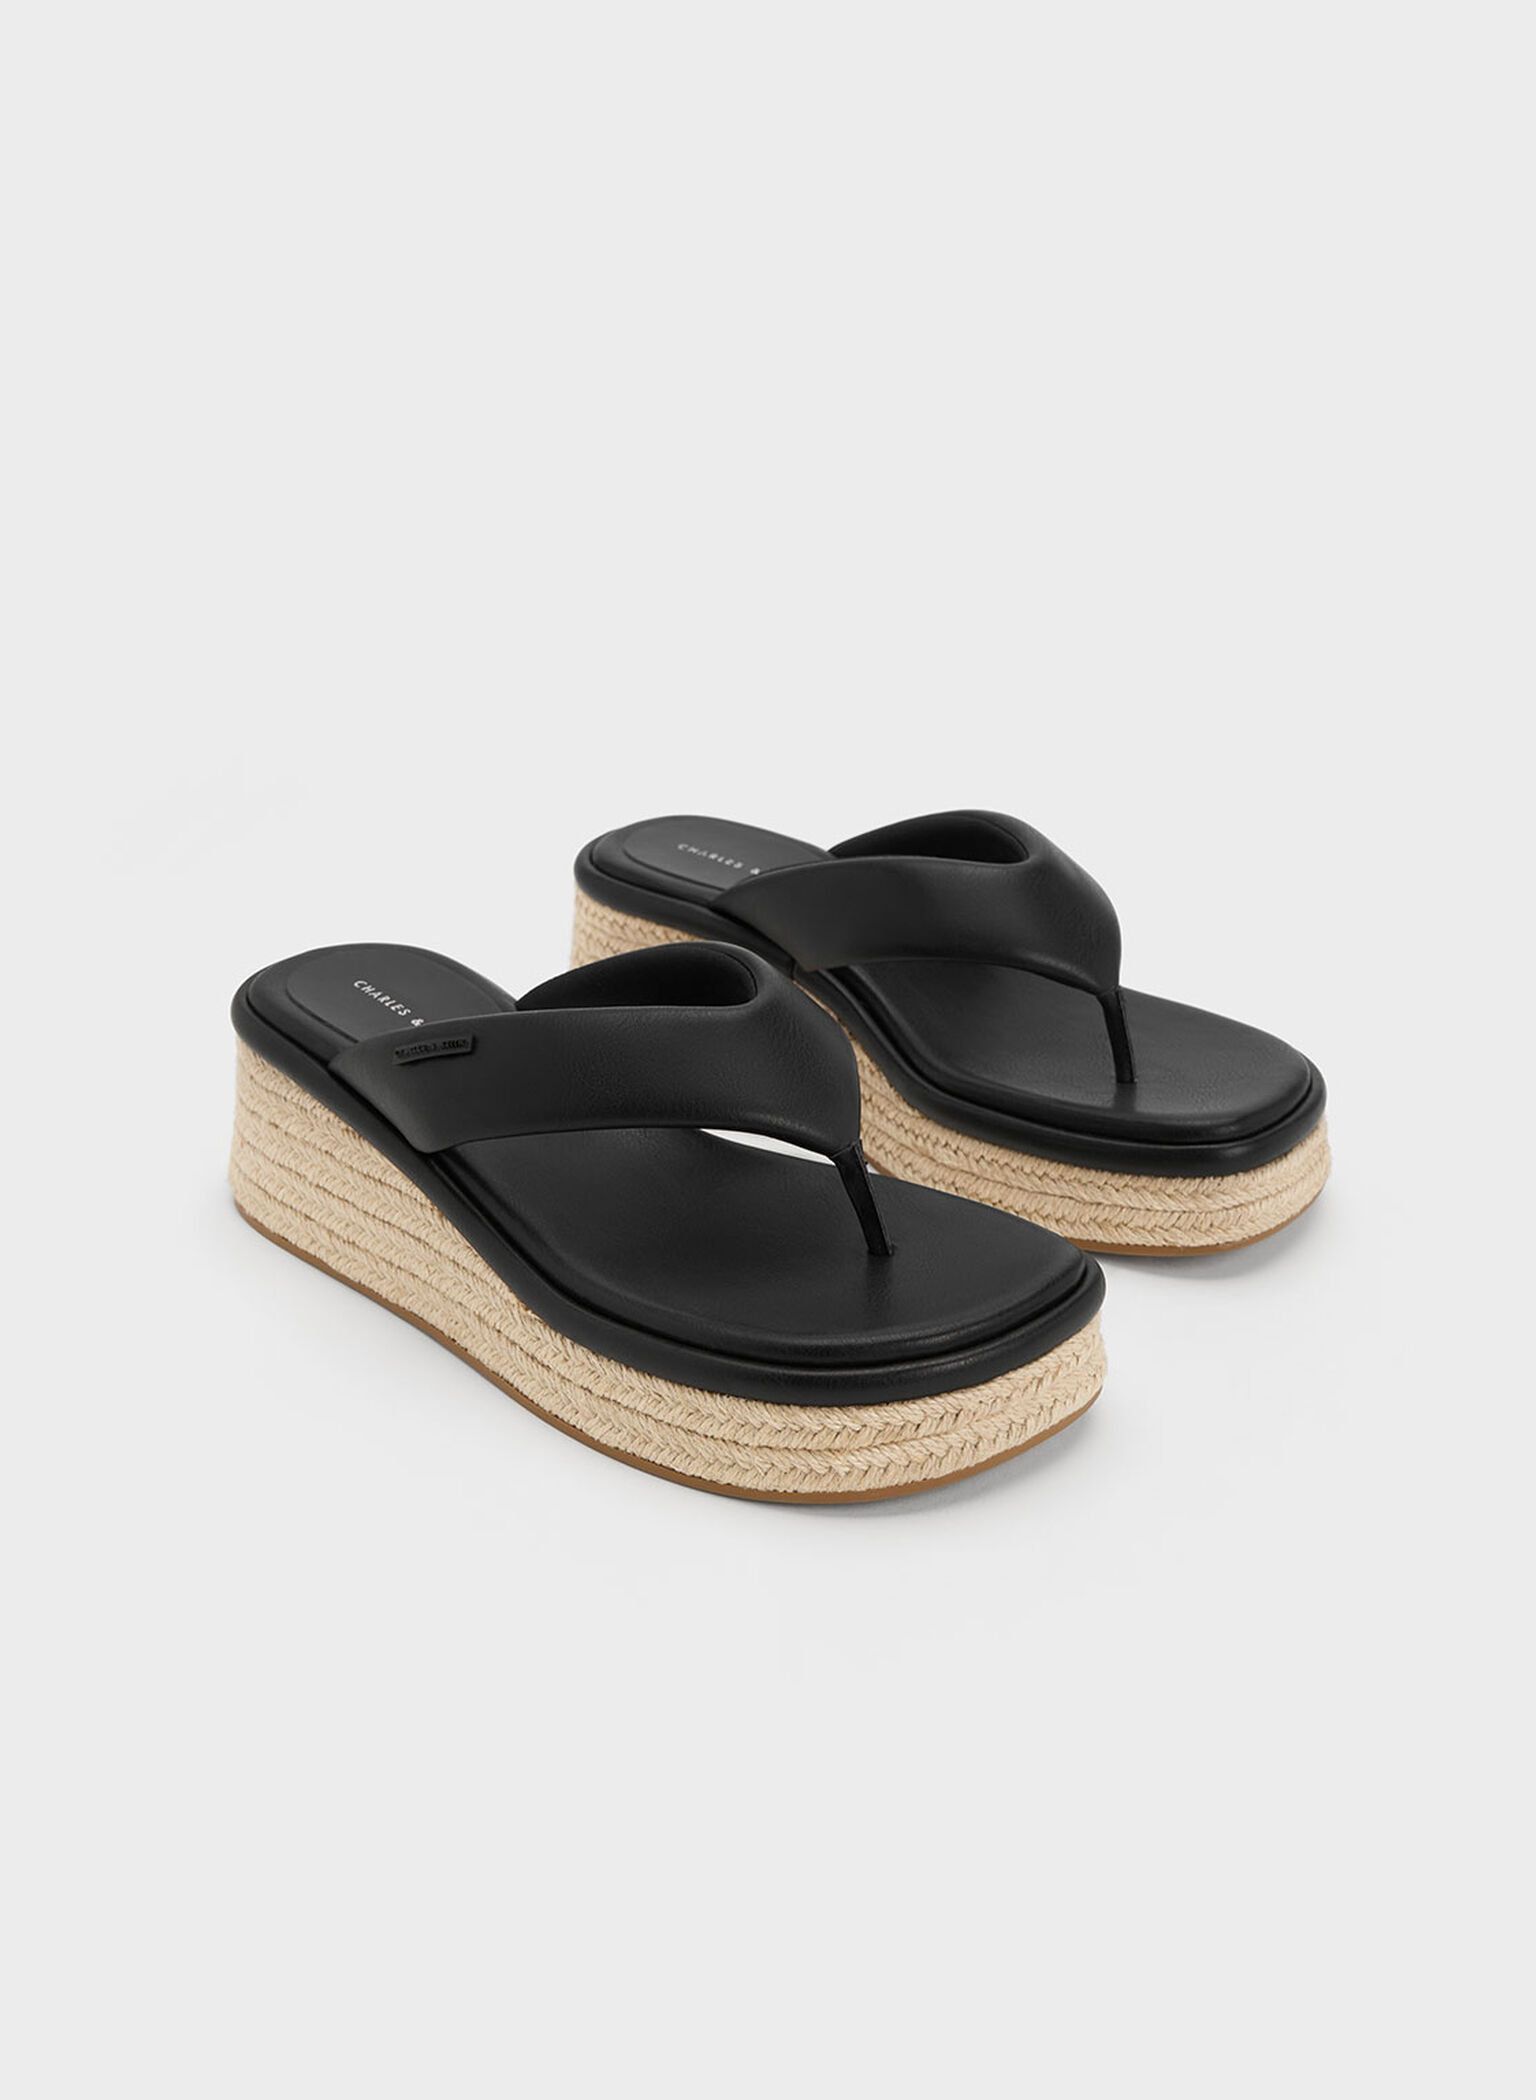 Espadrille Thong Sandals, Black, hi-res